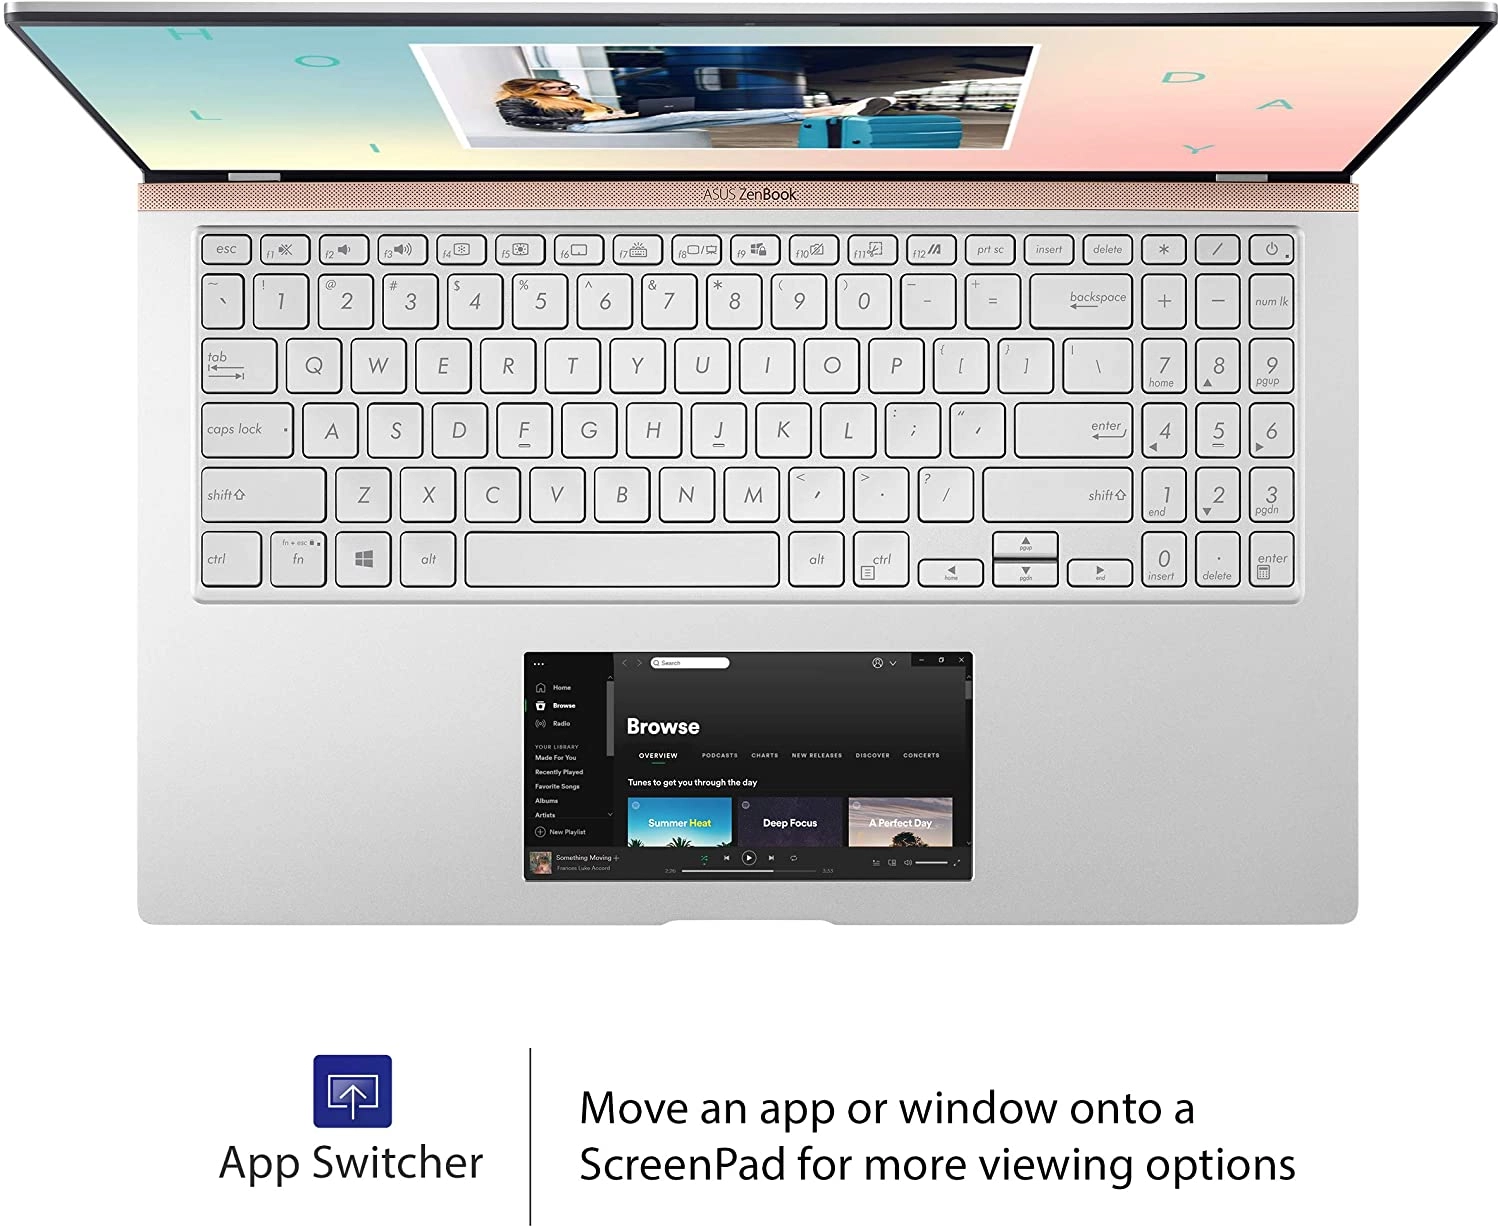 Asus ZenBook 15 laptop image